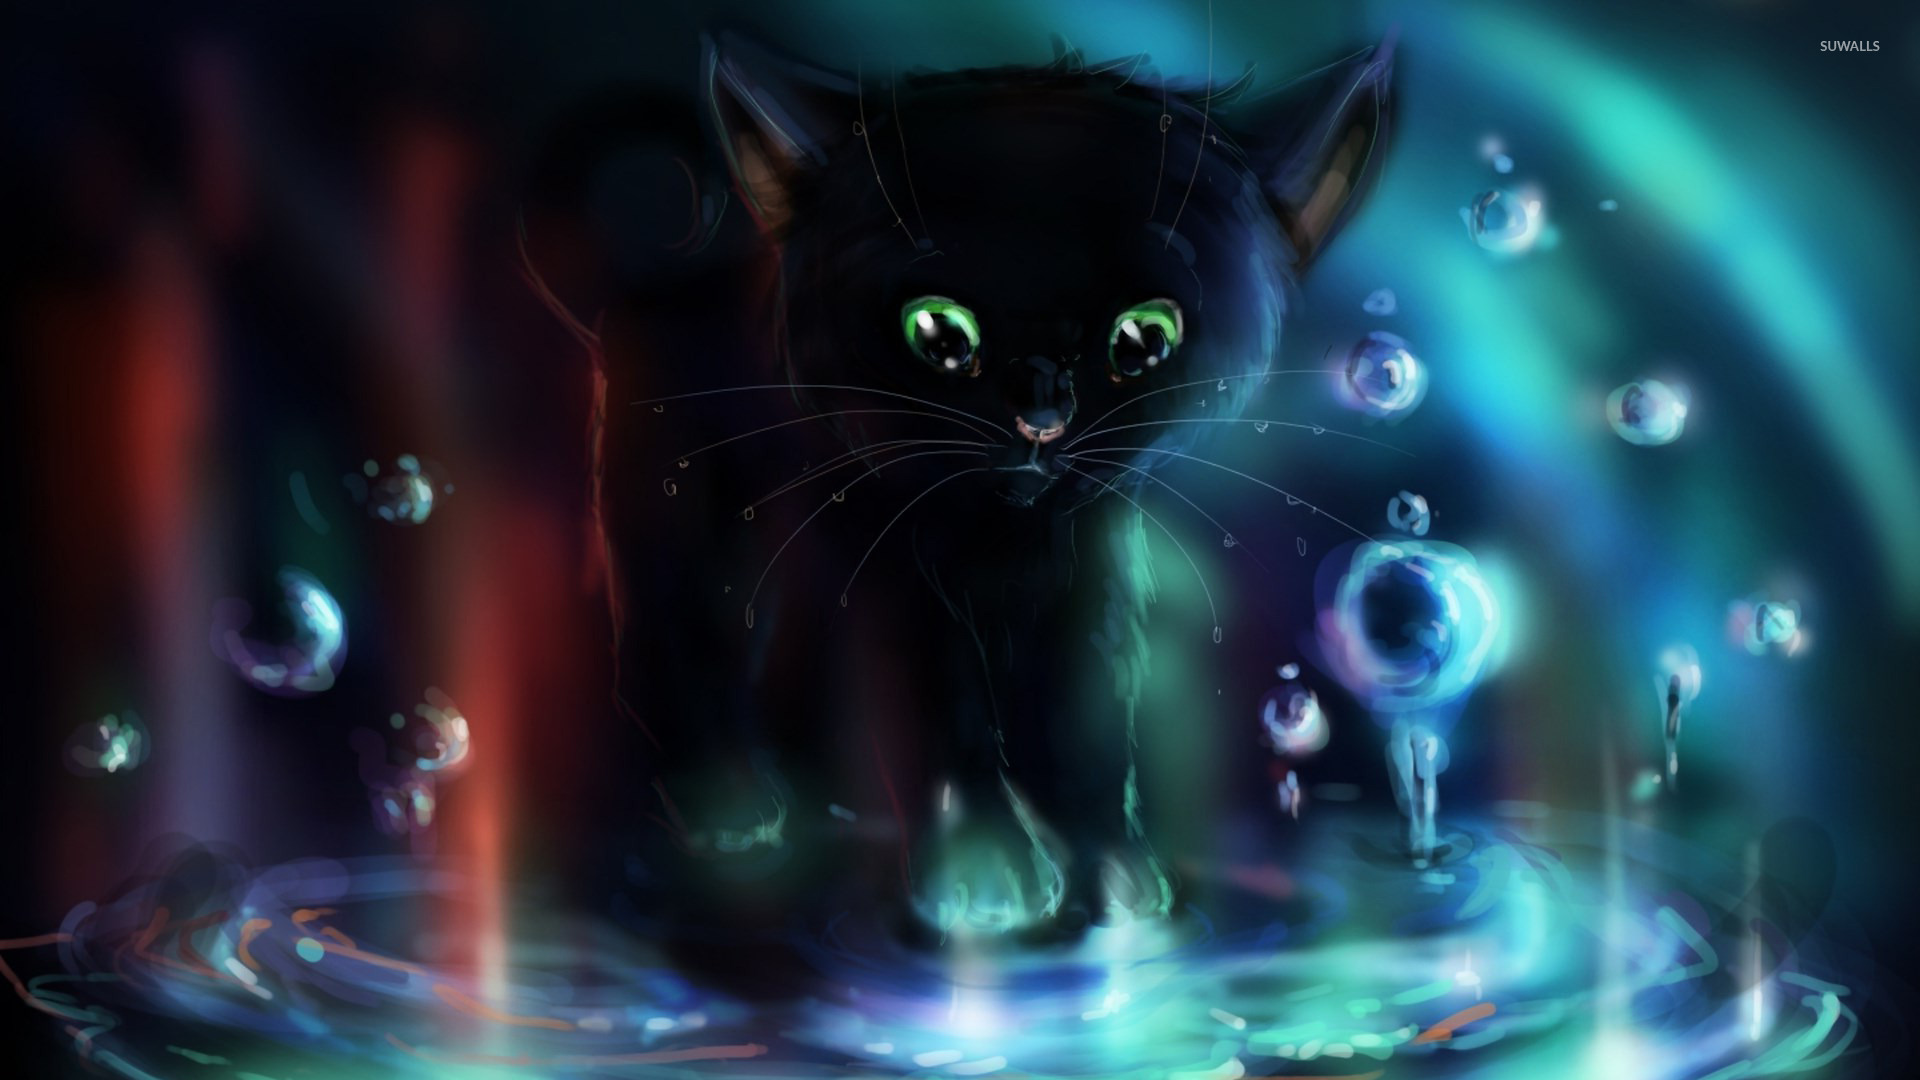 Black Kitten Playing In The Puddle Wallpaper Digital Art